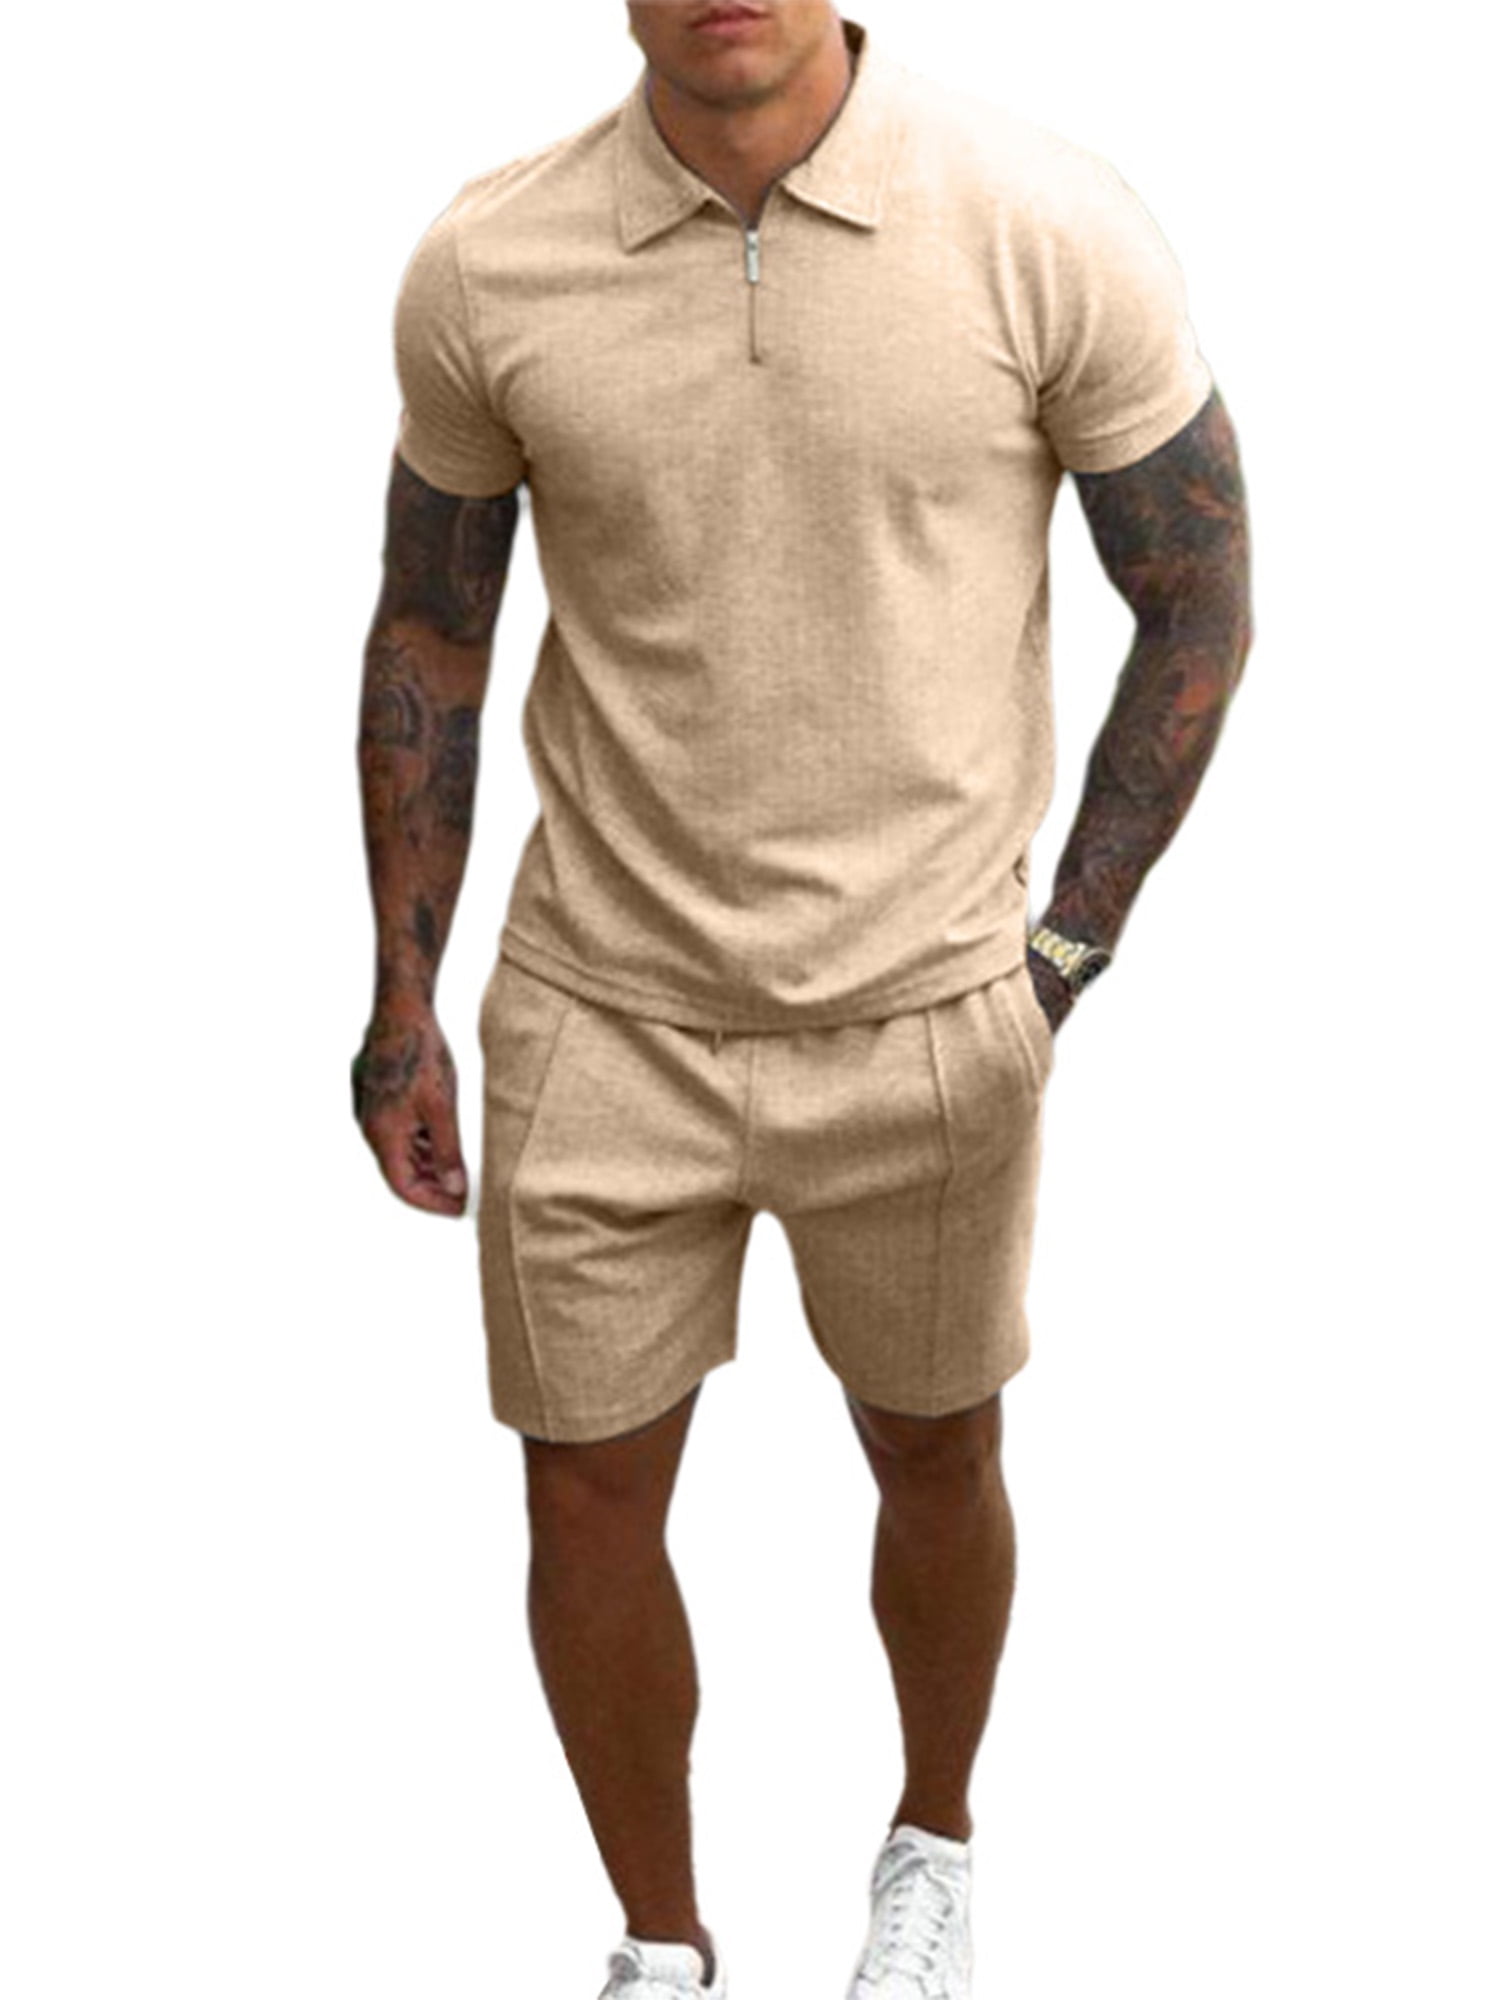 Patrick Mens Navy Blue White Short Sleeve Football Top and Shorts Set Size XXL 